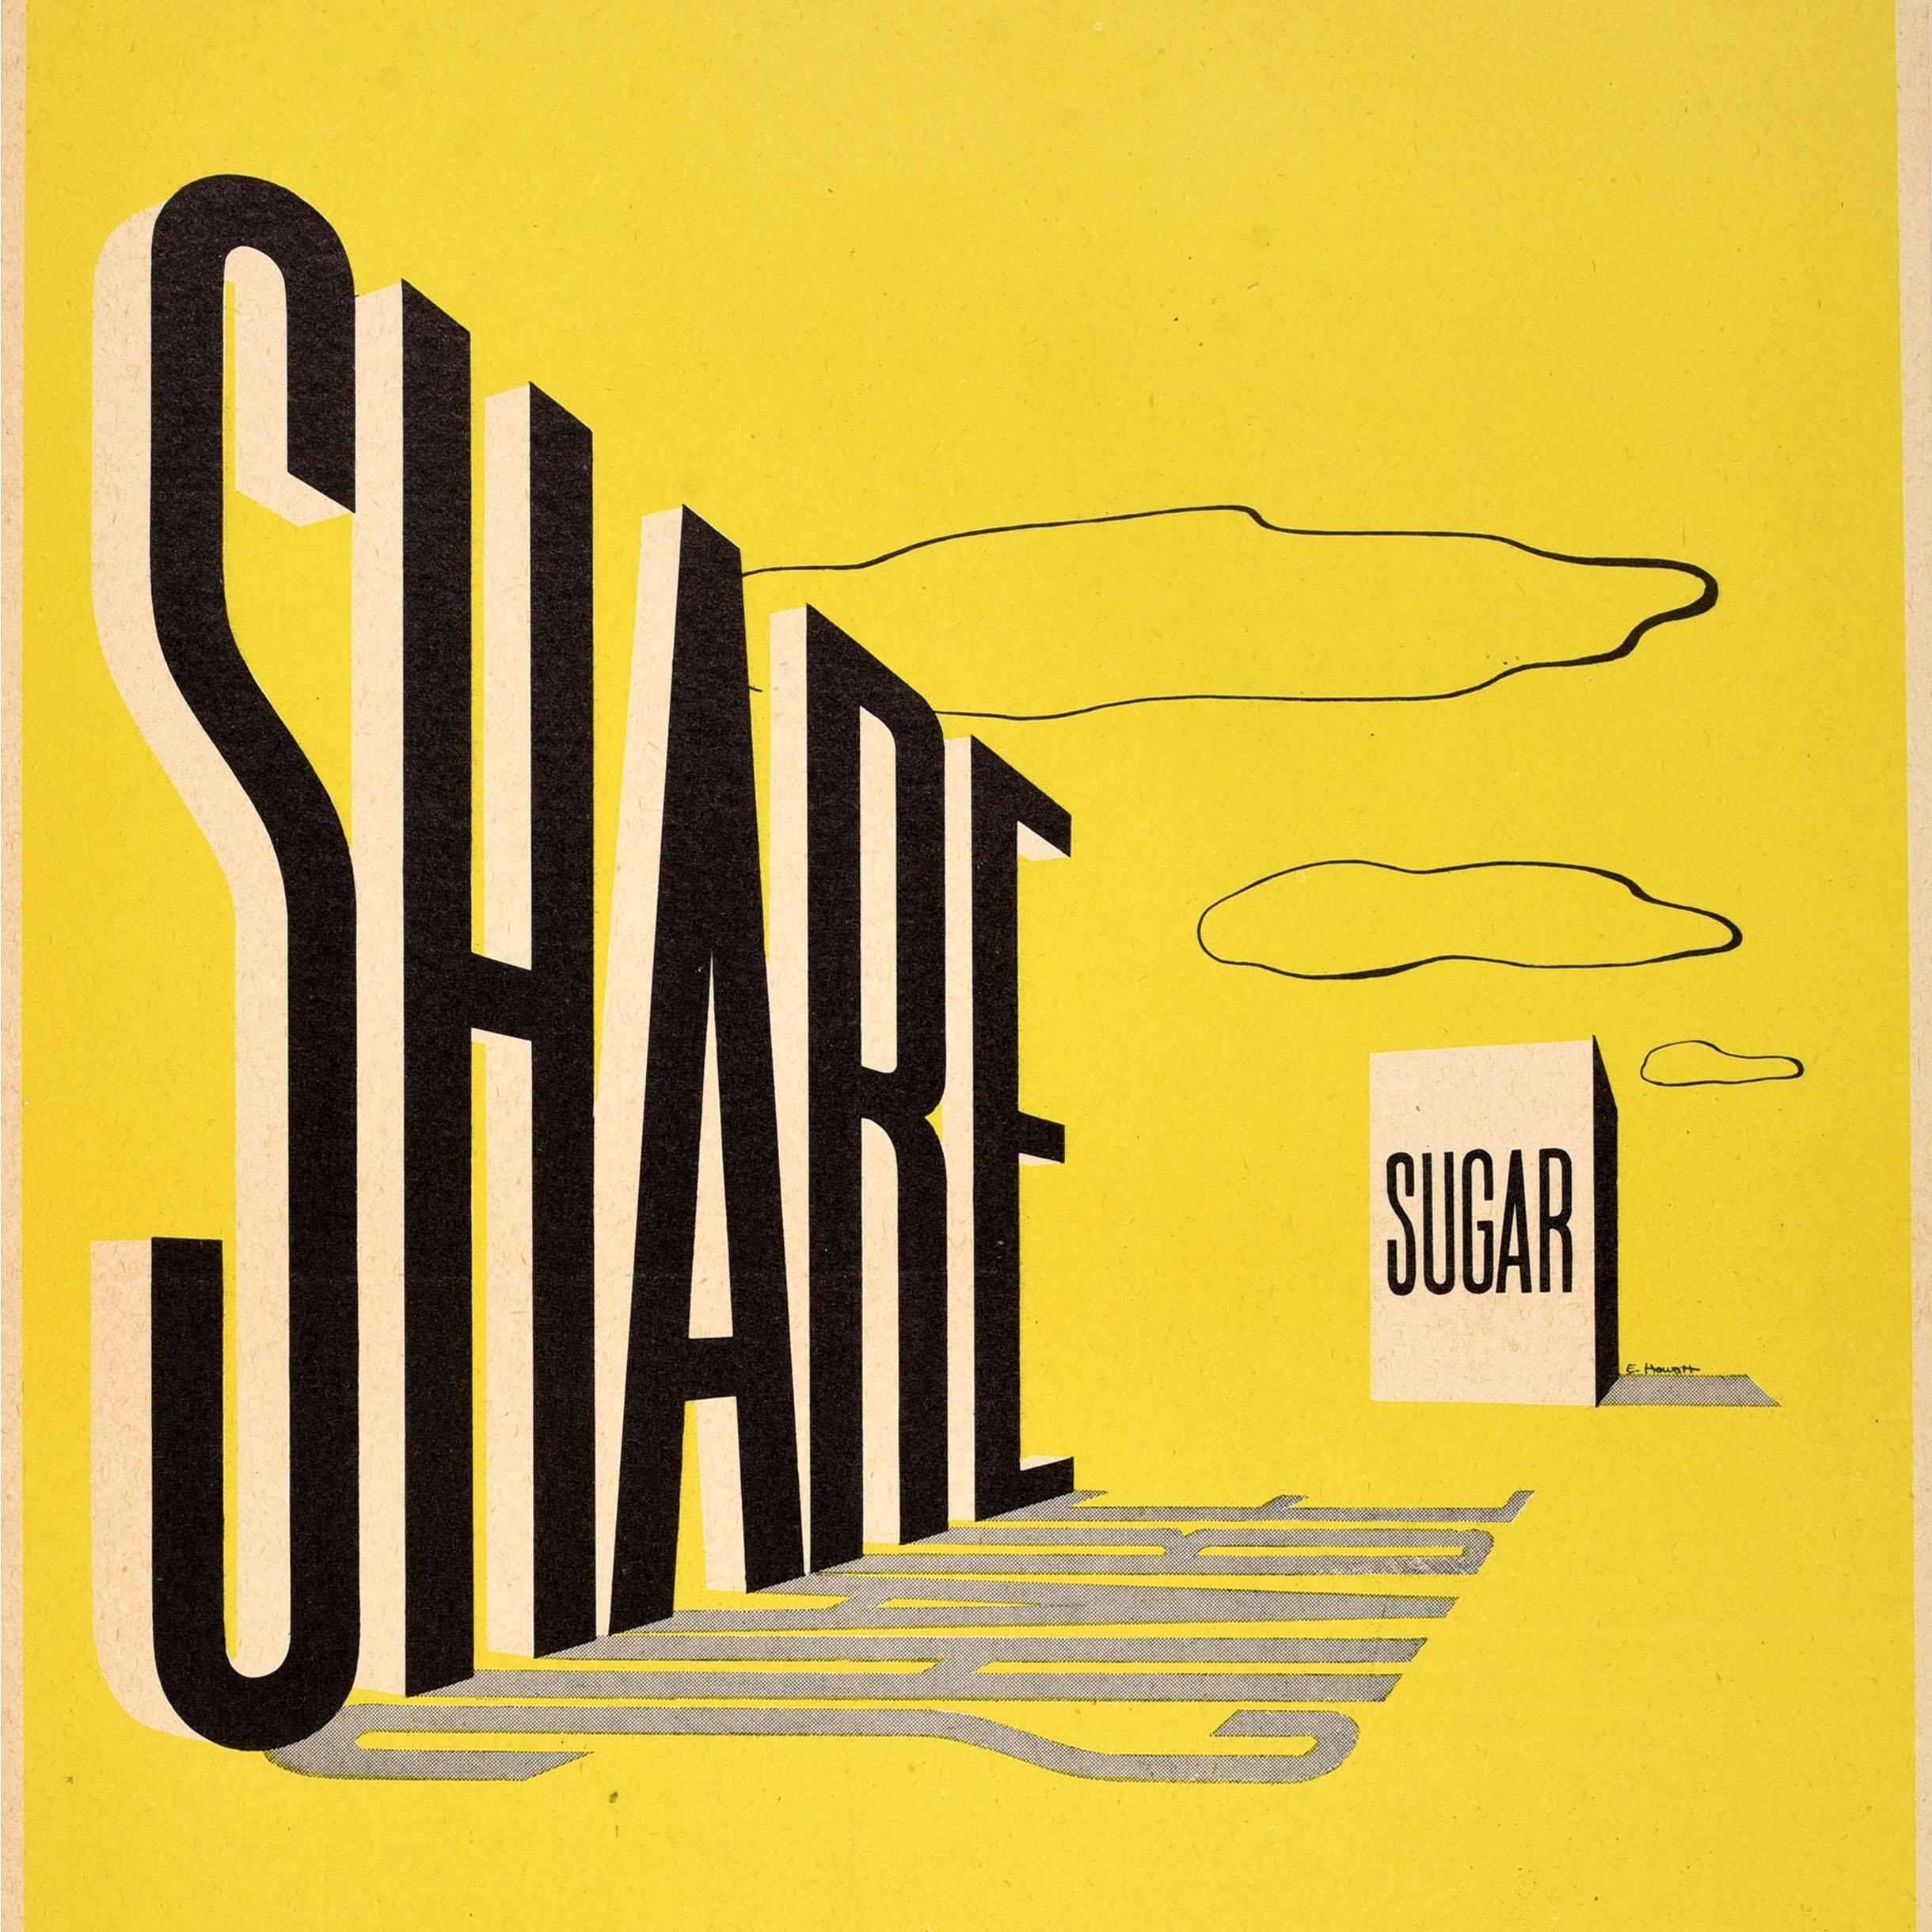 Original Vintage War Propaganda Poster Share Sugar WWII Modernism US Rationing - Print by Unknown